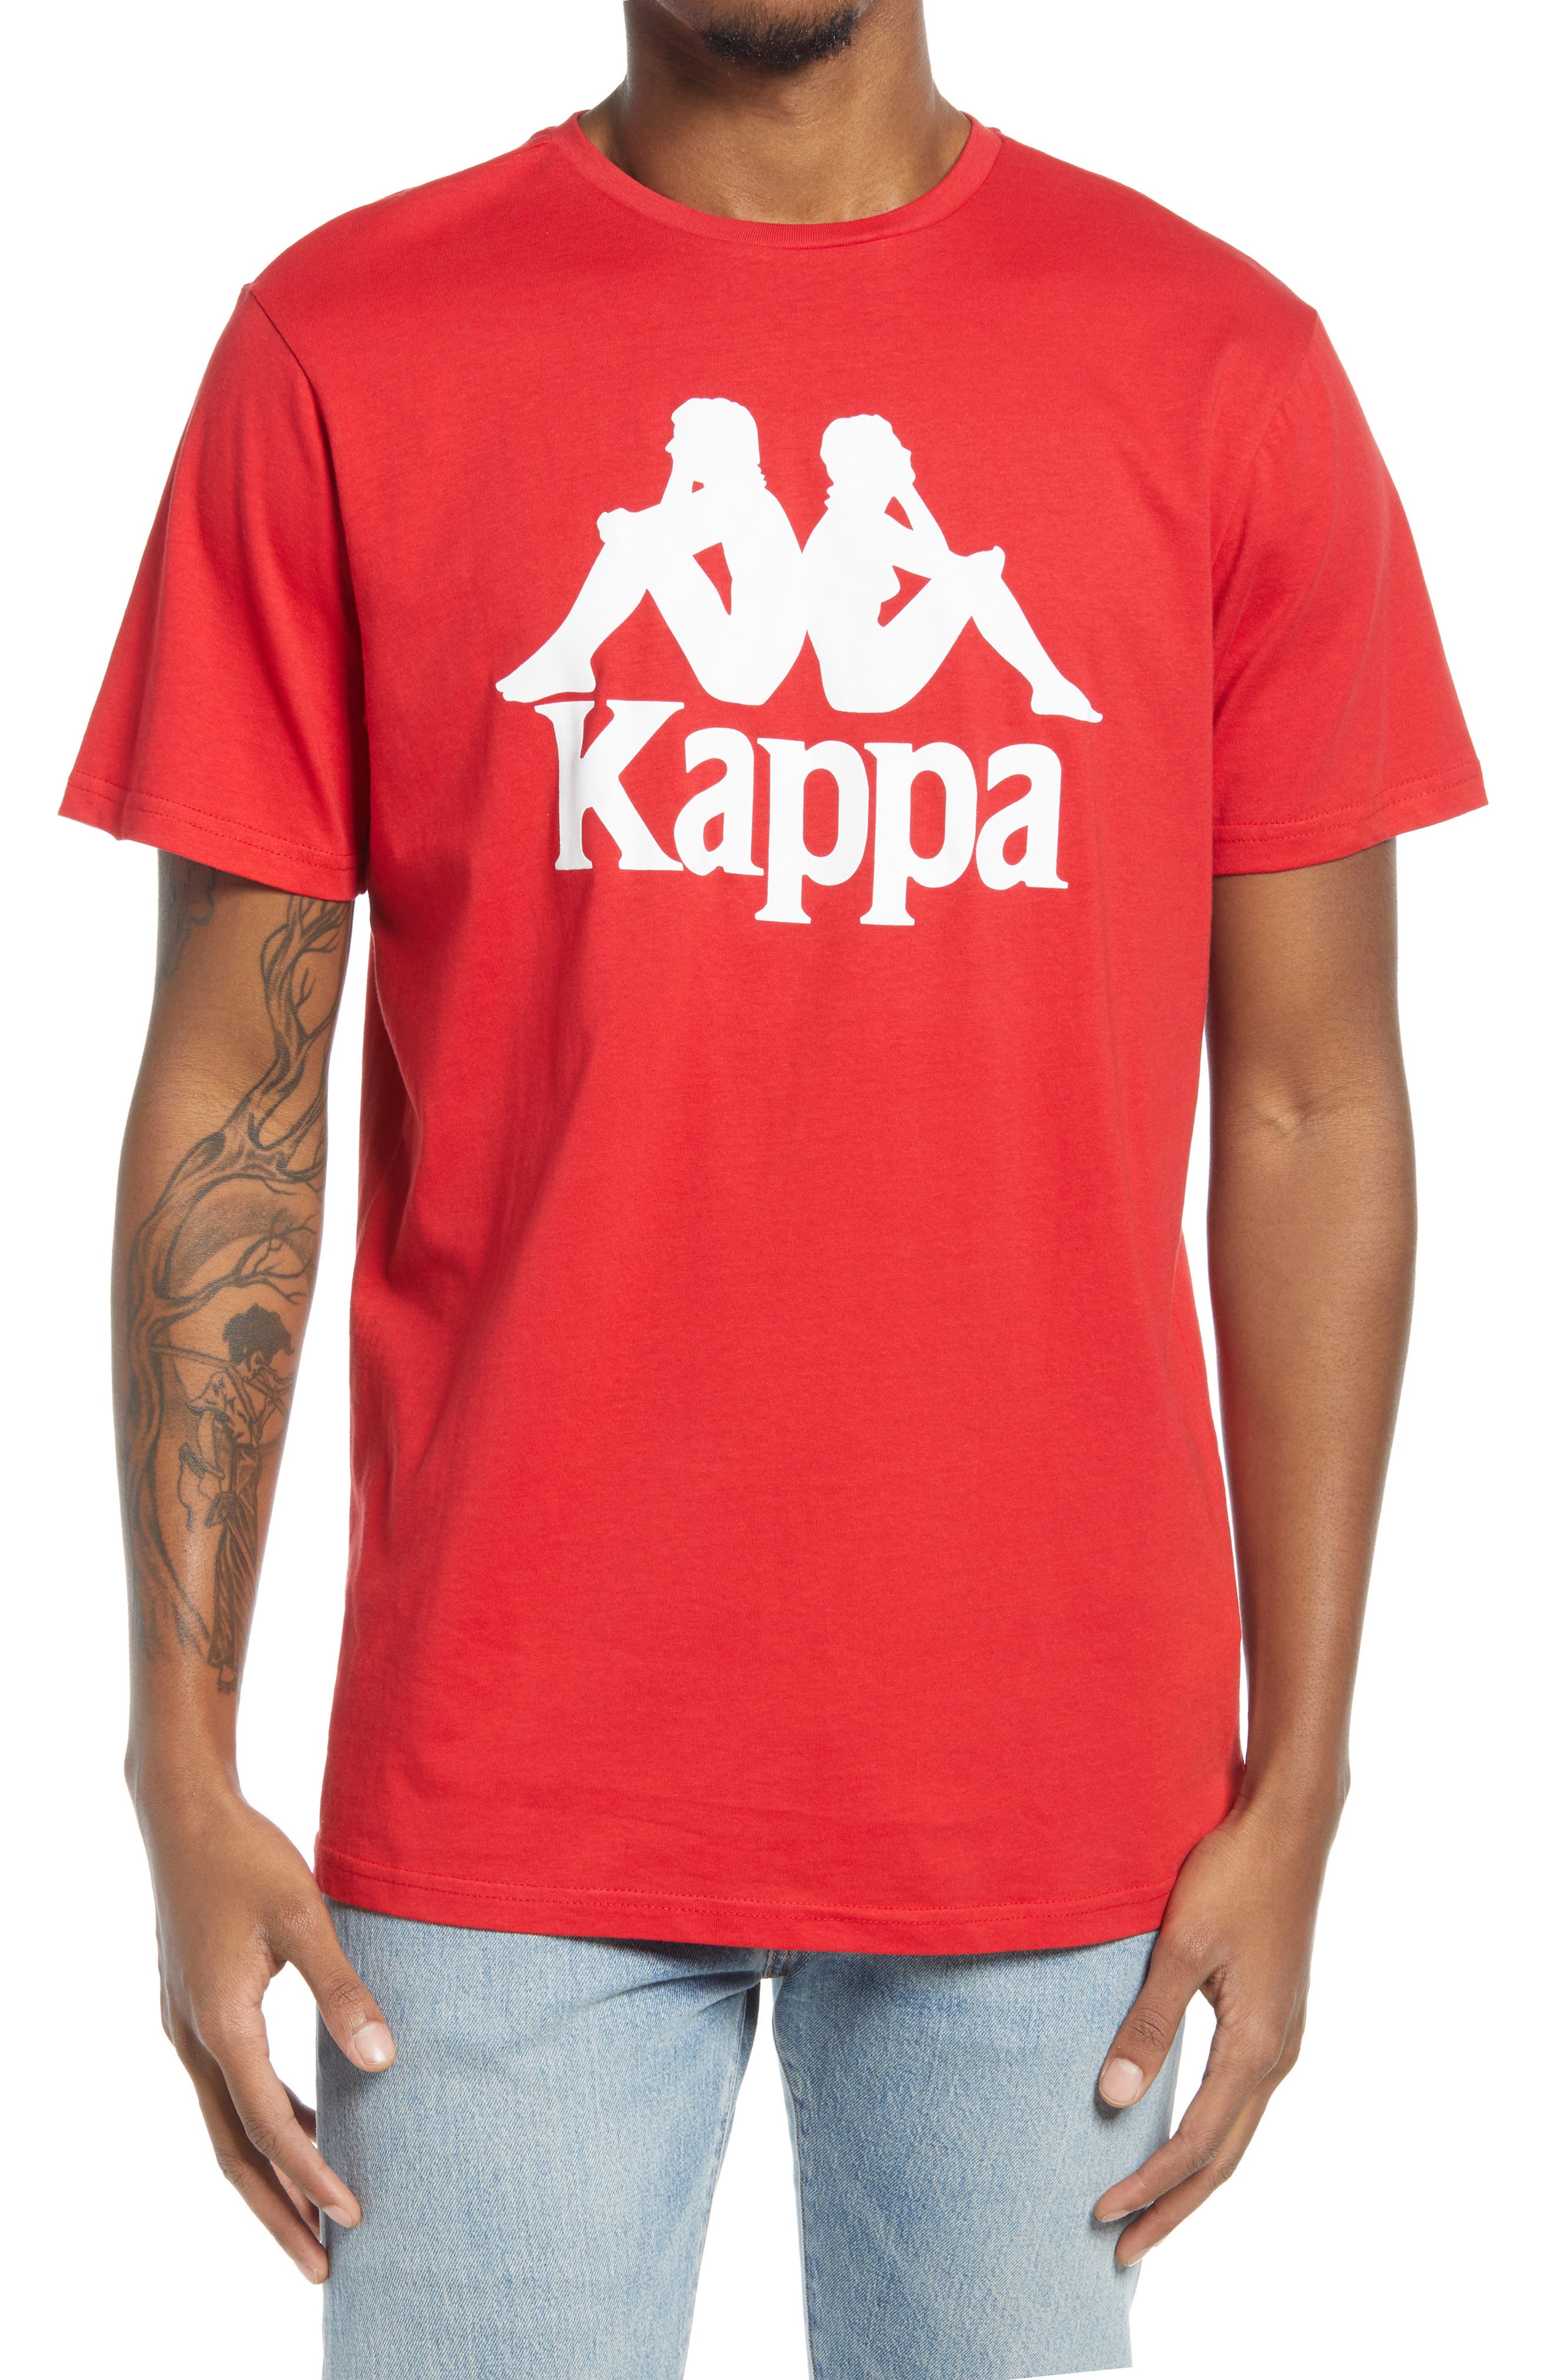 kappa t shirt red